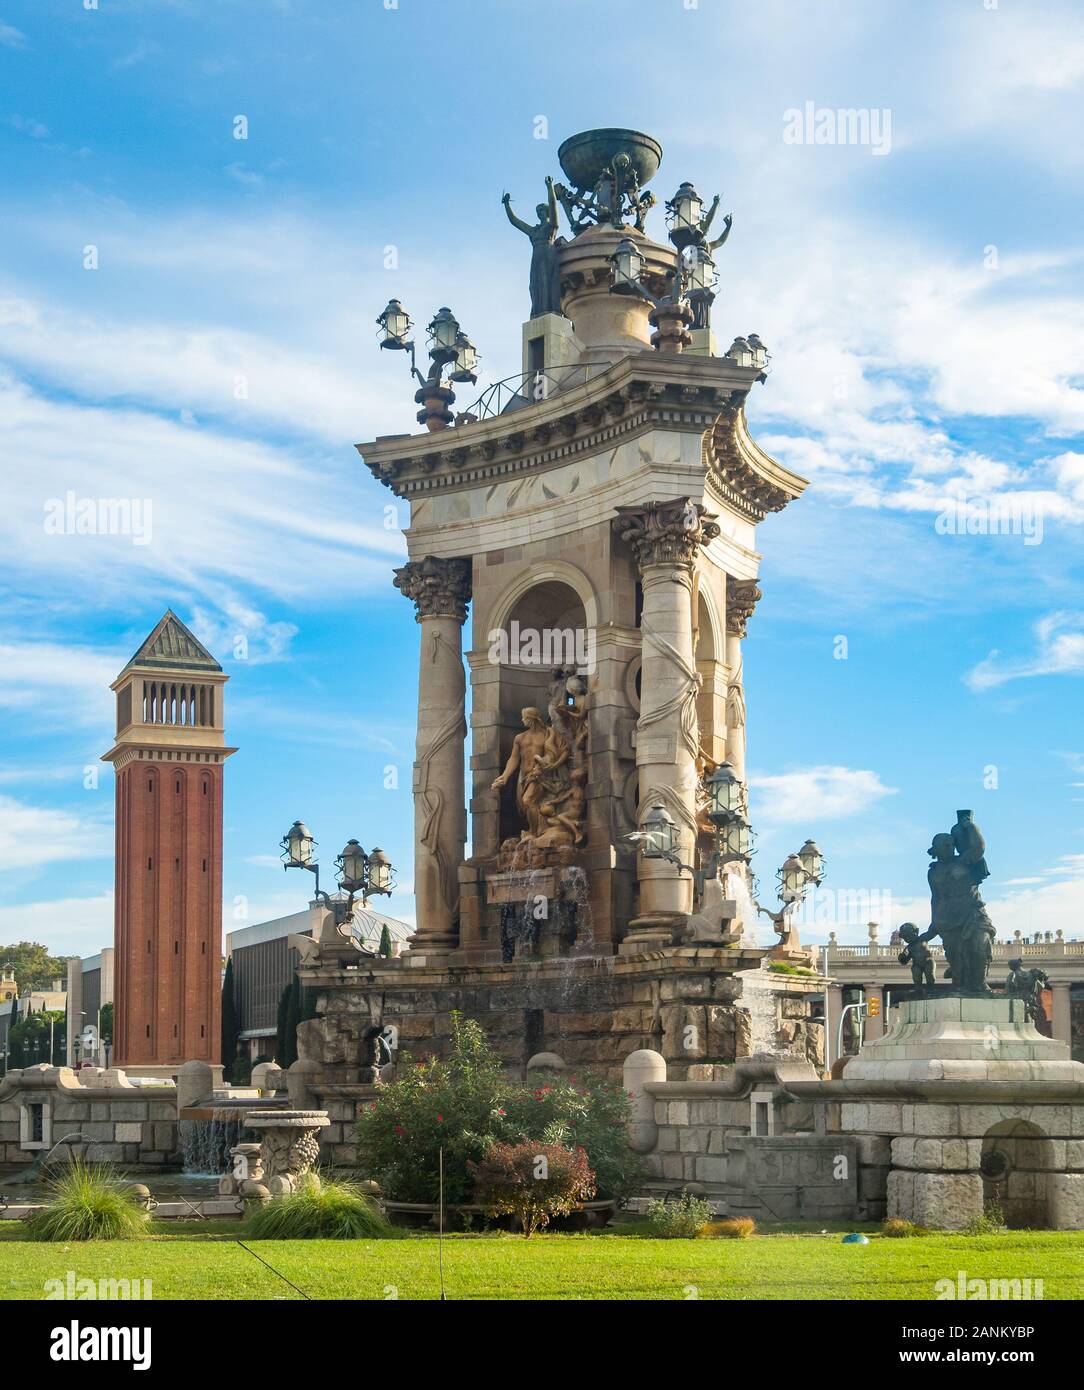 Statues and Fountain at Plaza de Espana, in Barcelona Spain Stock Photo